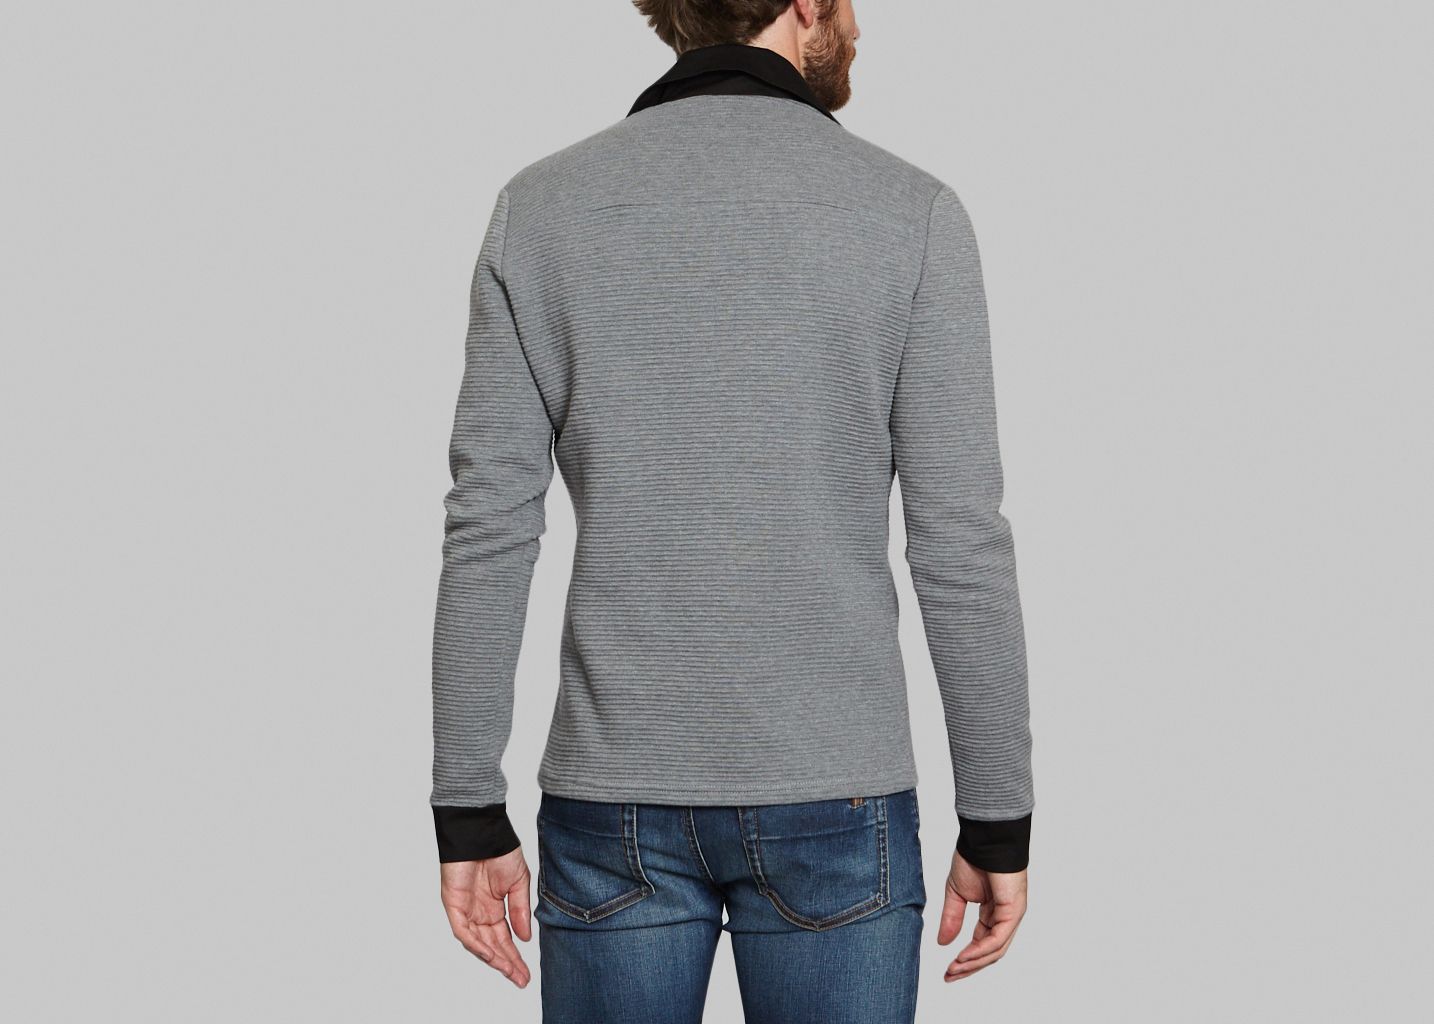 Jacquard sweater - Sébastien Blondin